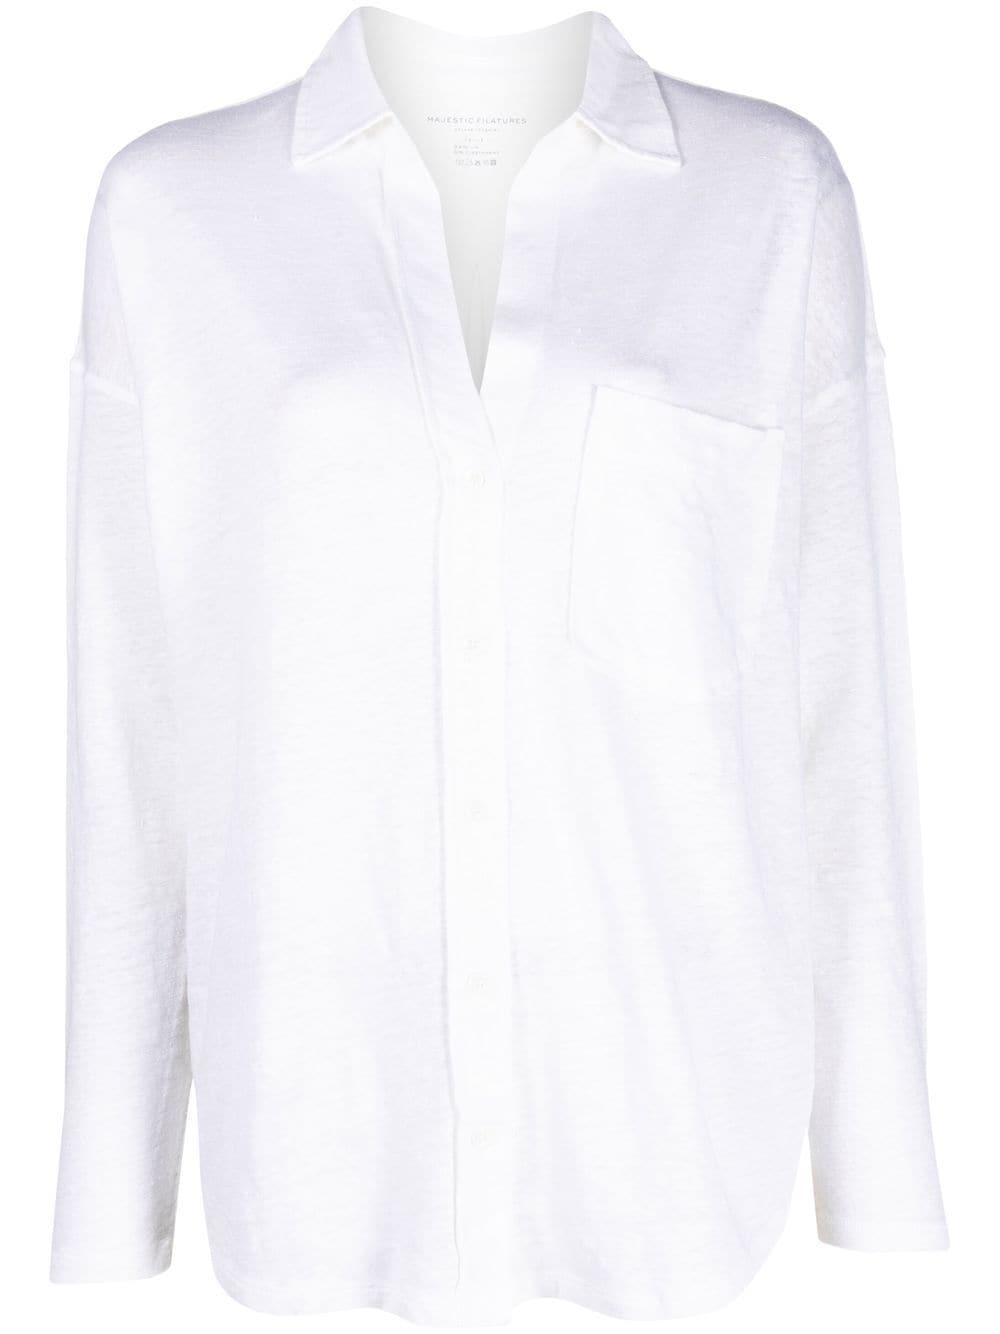 Majestic Filatures V-neck long-sleeve shirt - White von Majestic Filatures